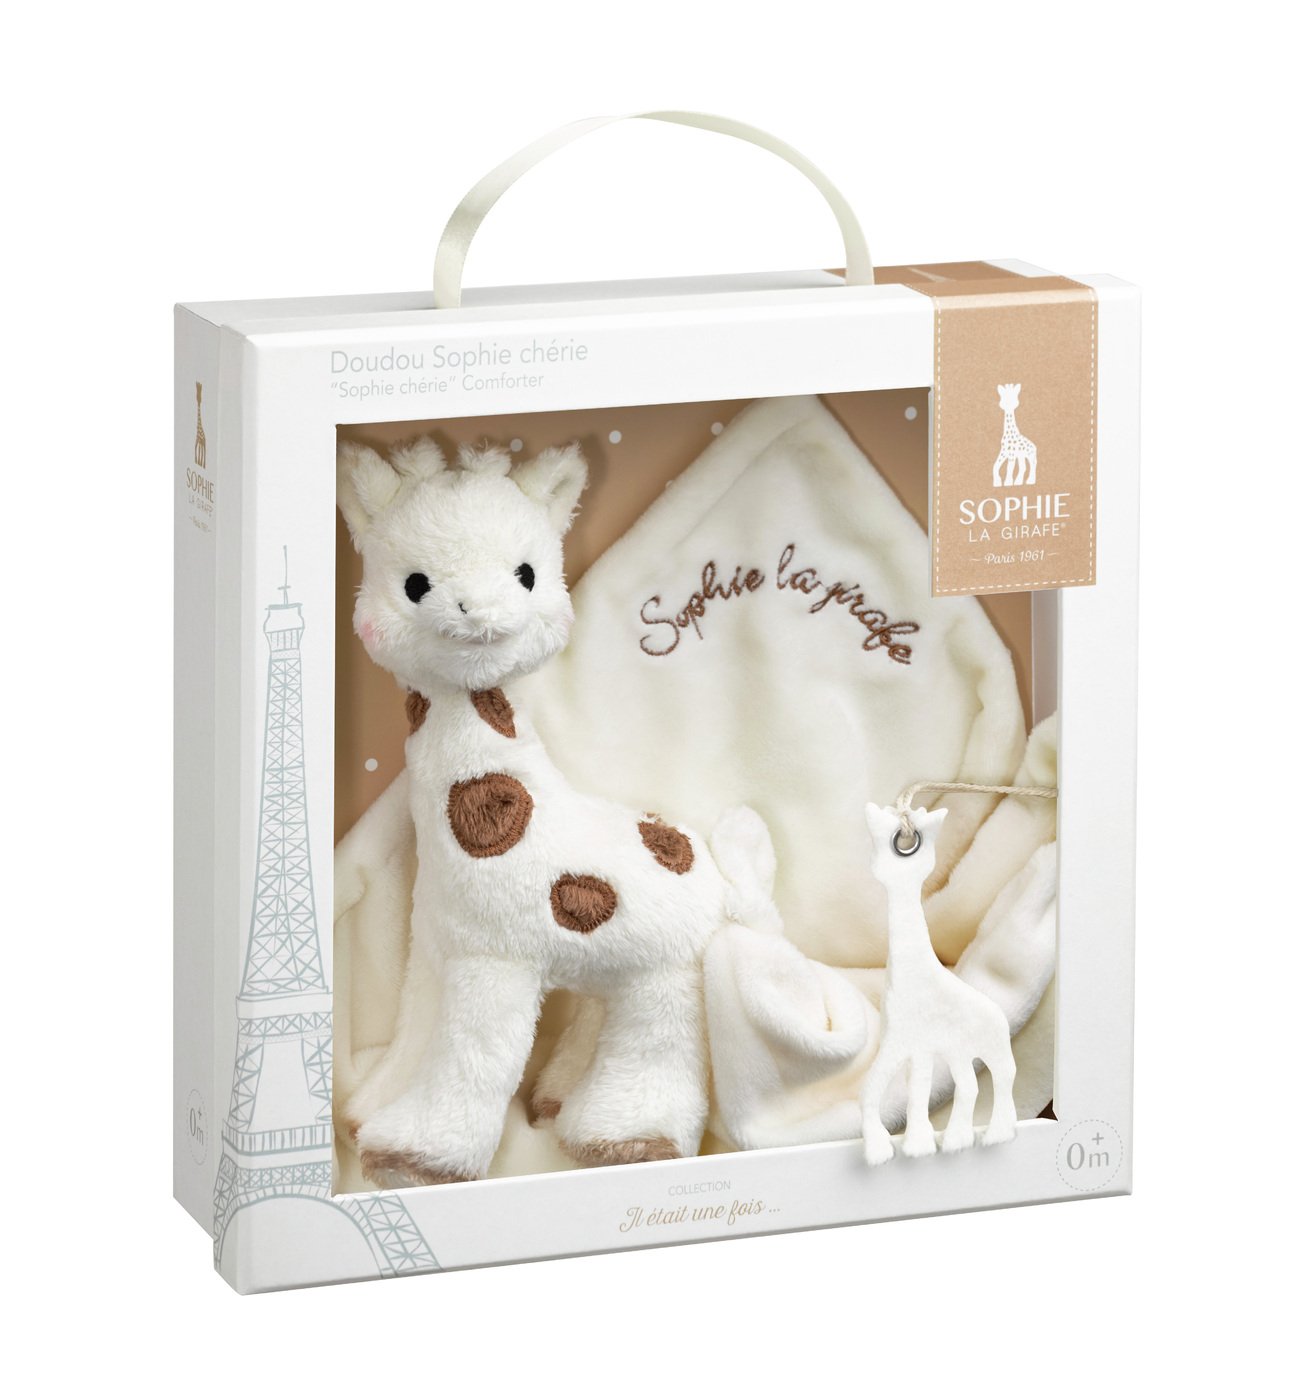 Vulli Sophie la girafe Cherie Comforter Gift Box Review